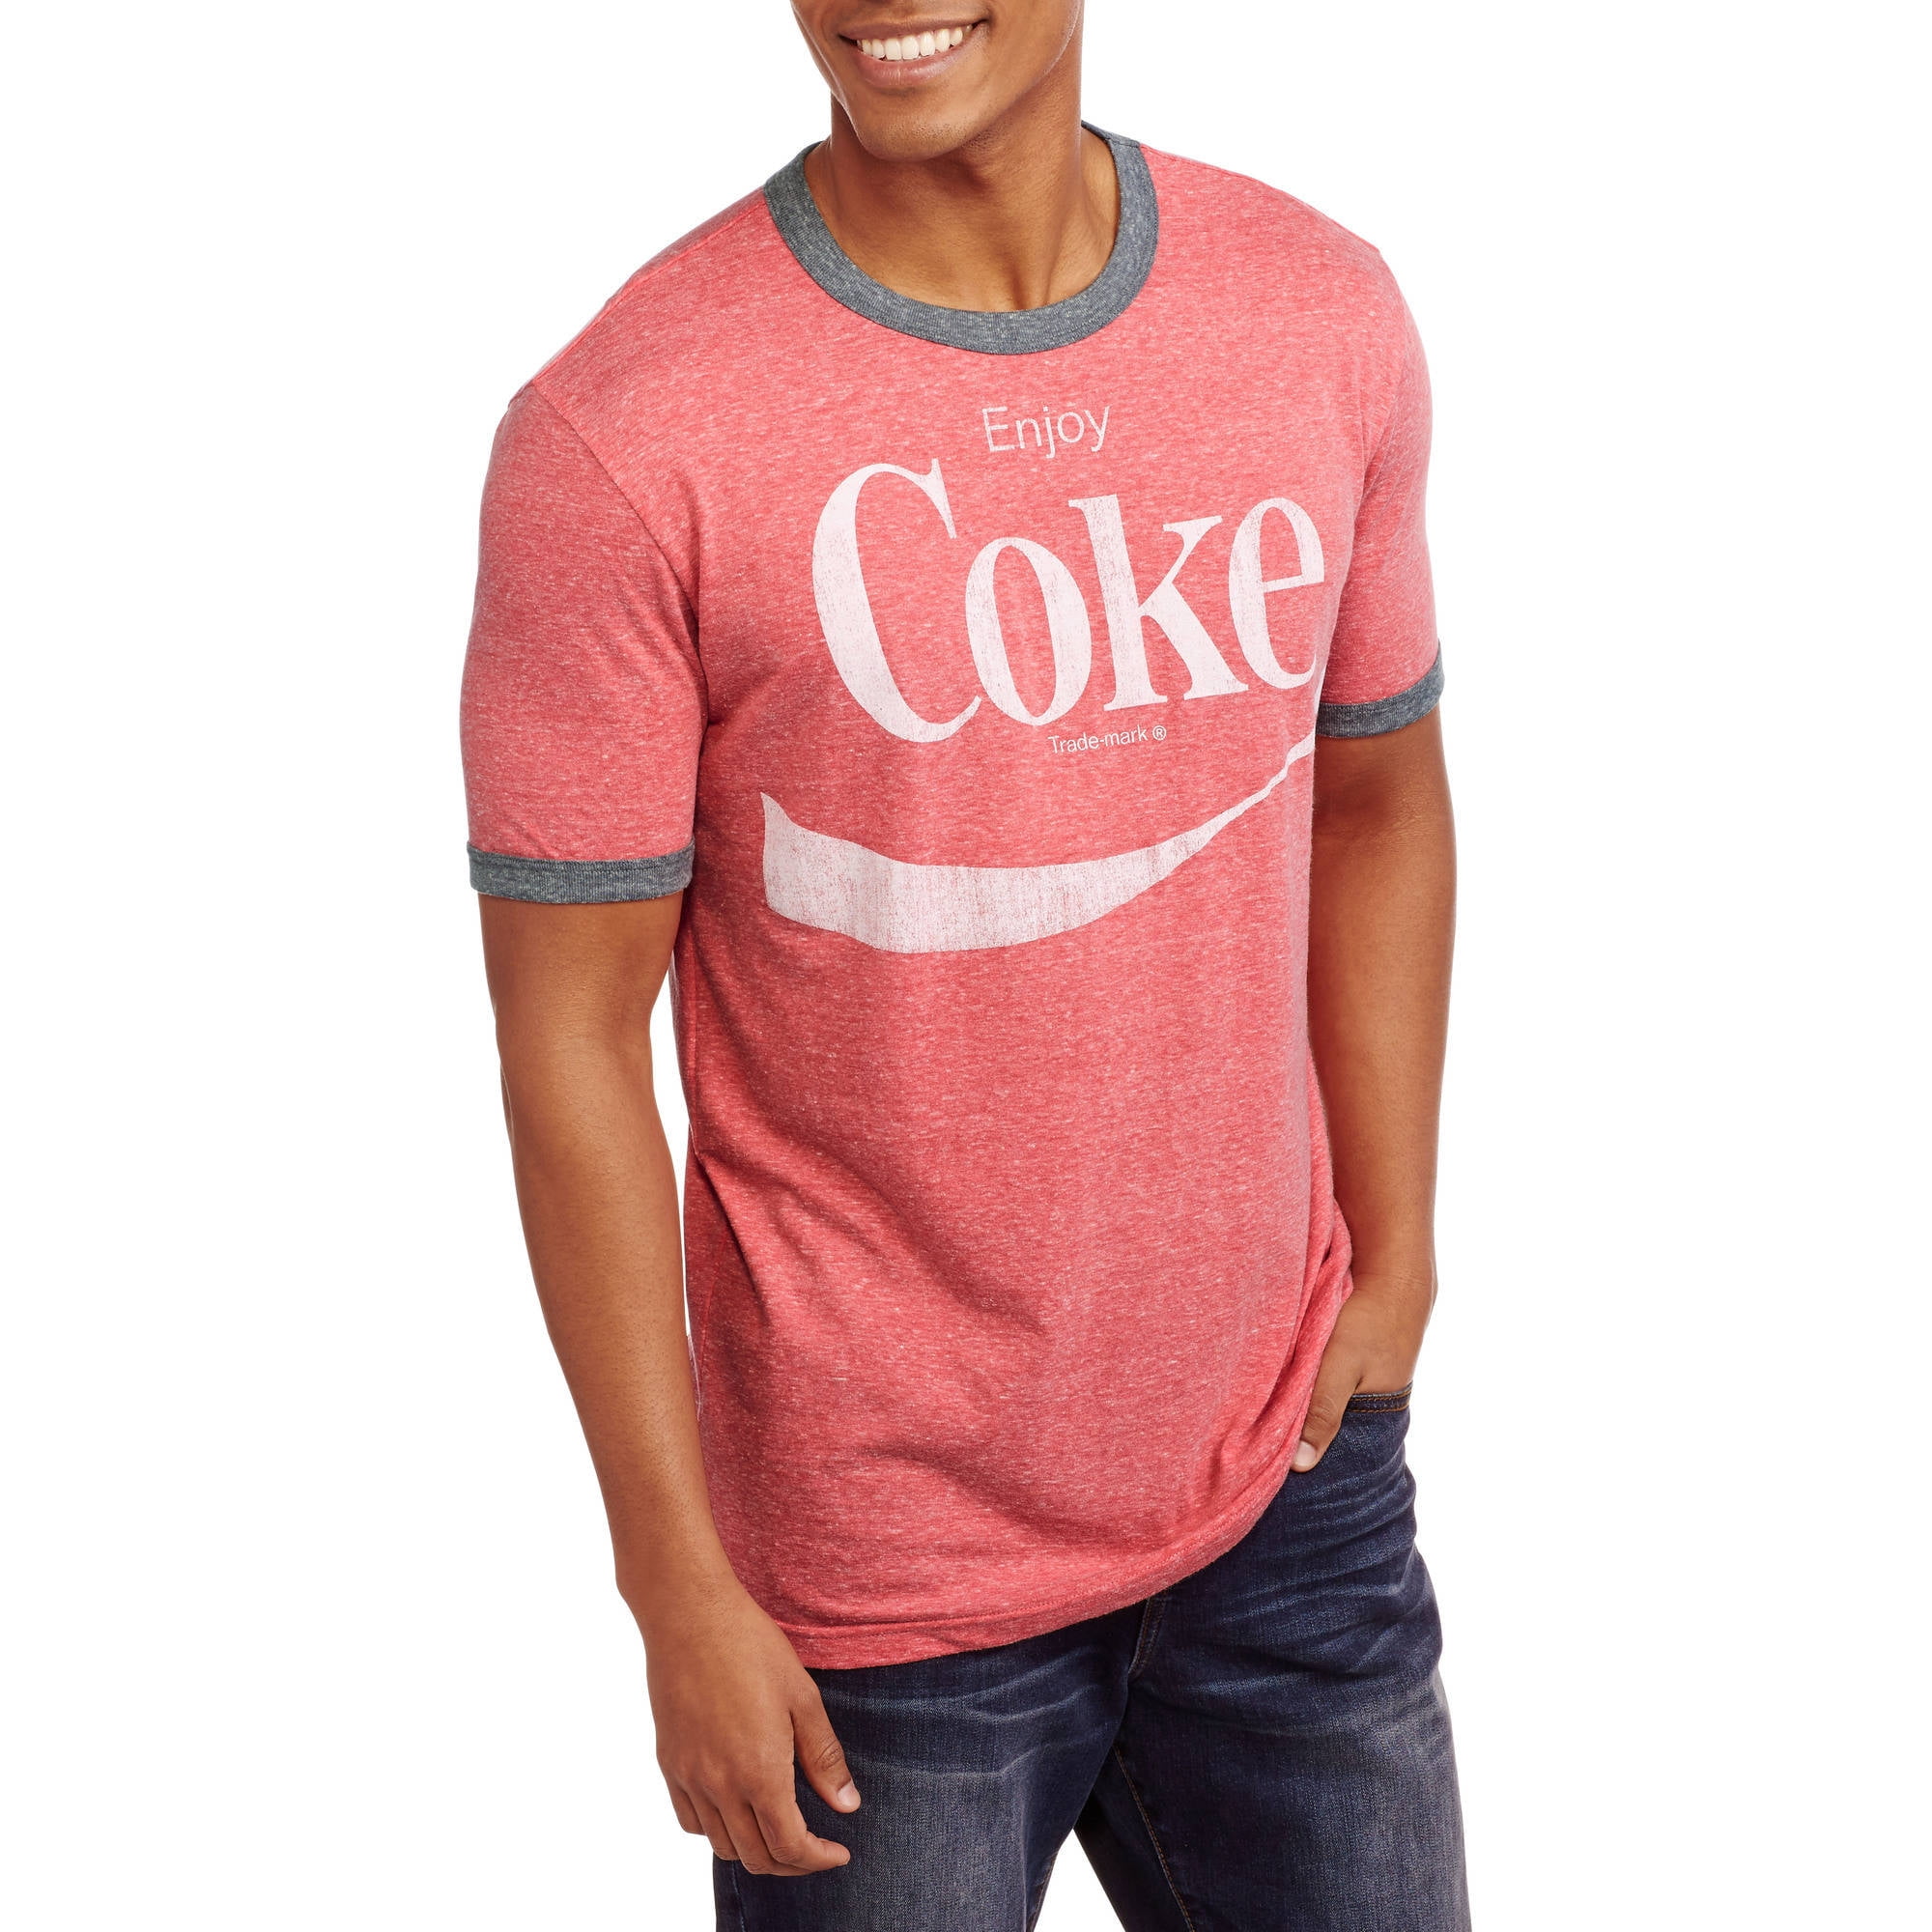 Enjoy Coke Men's Graphic Ringer Tee - Walmart.com